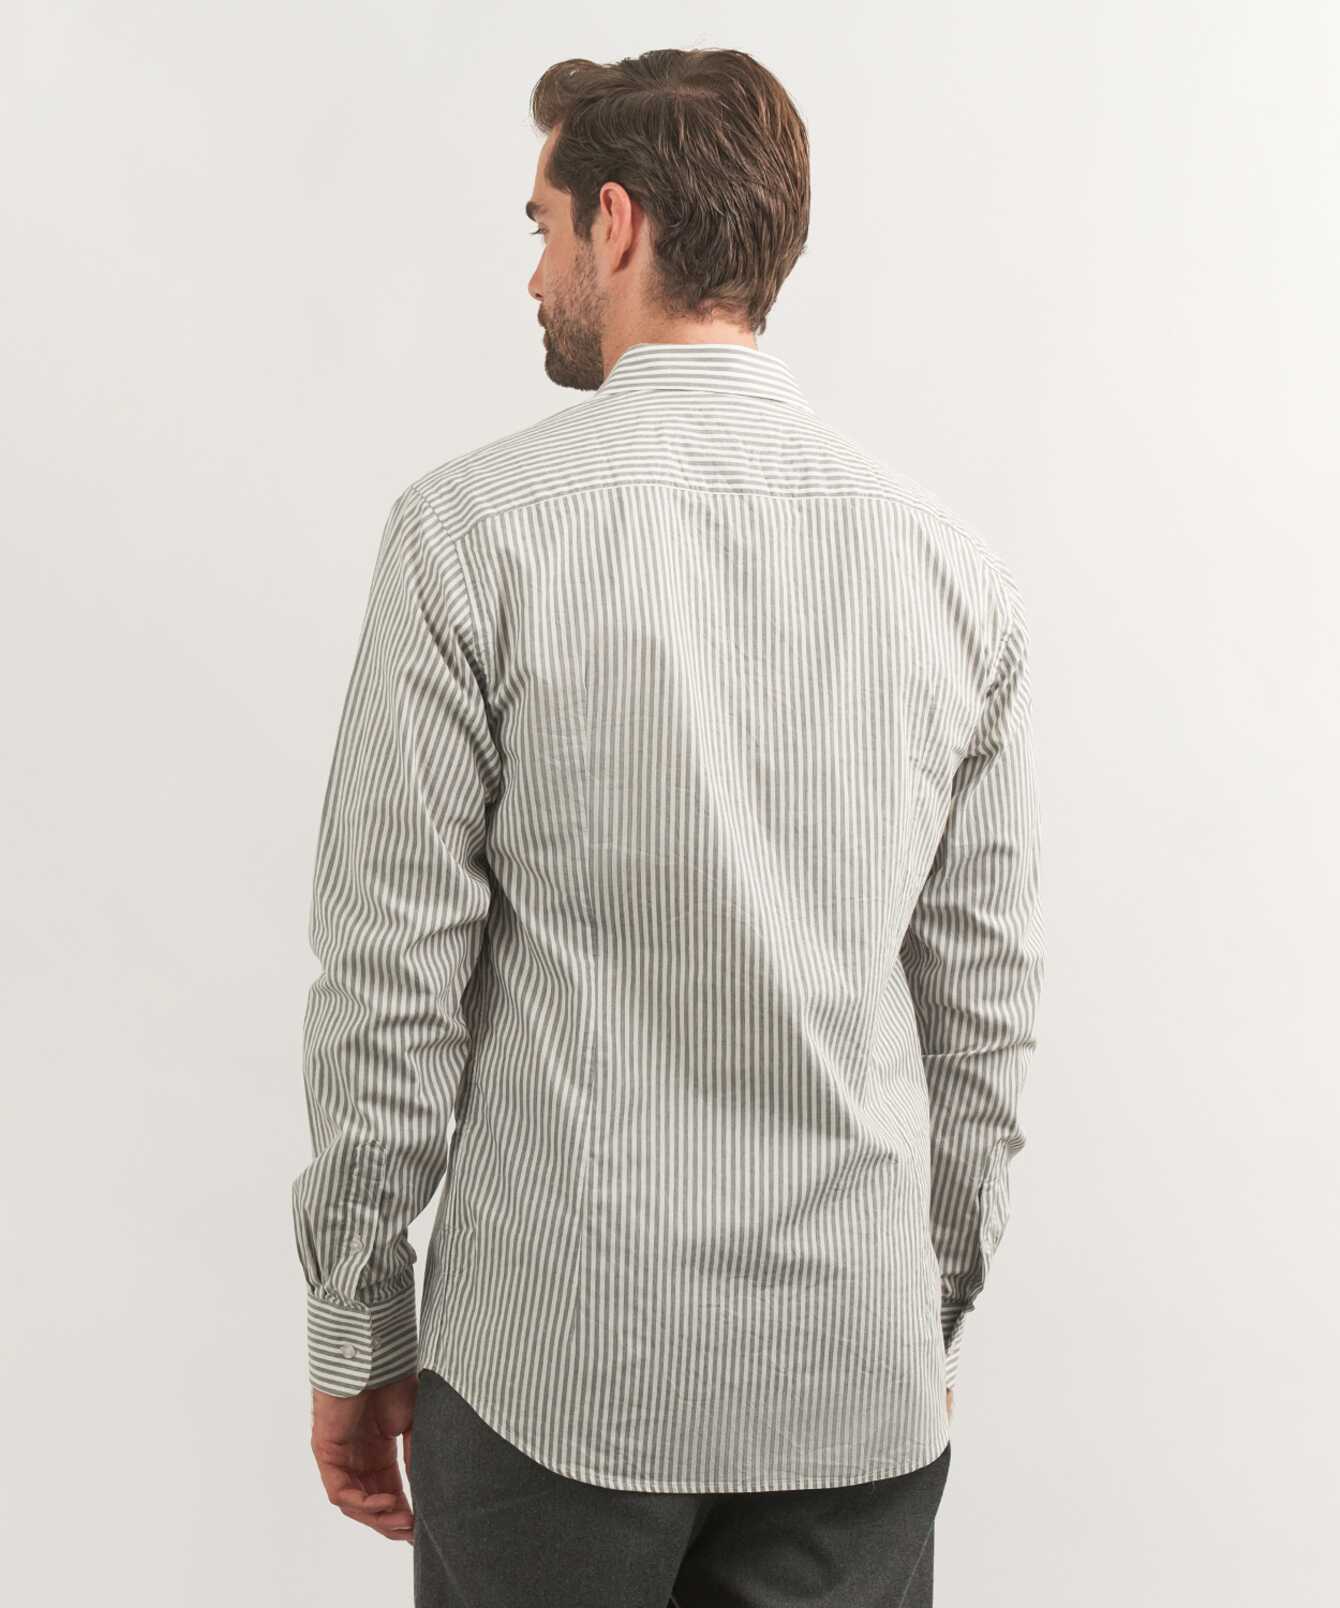 Shirt Montmelo Grey Striped Twill Shirt The Shirt Factory